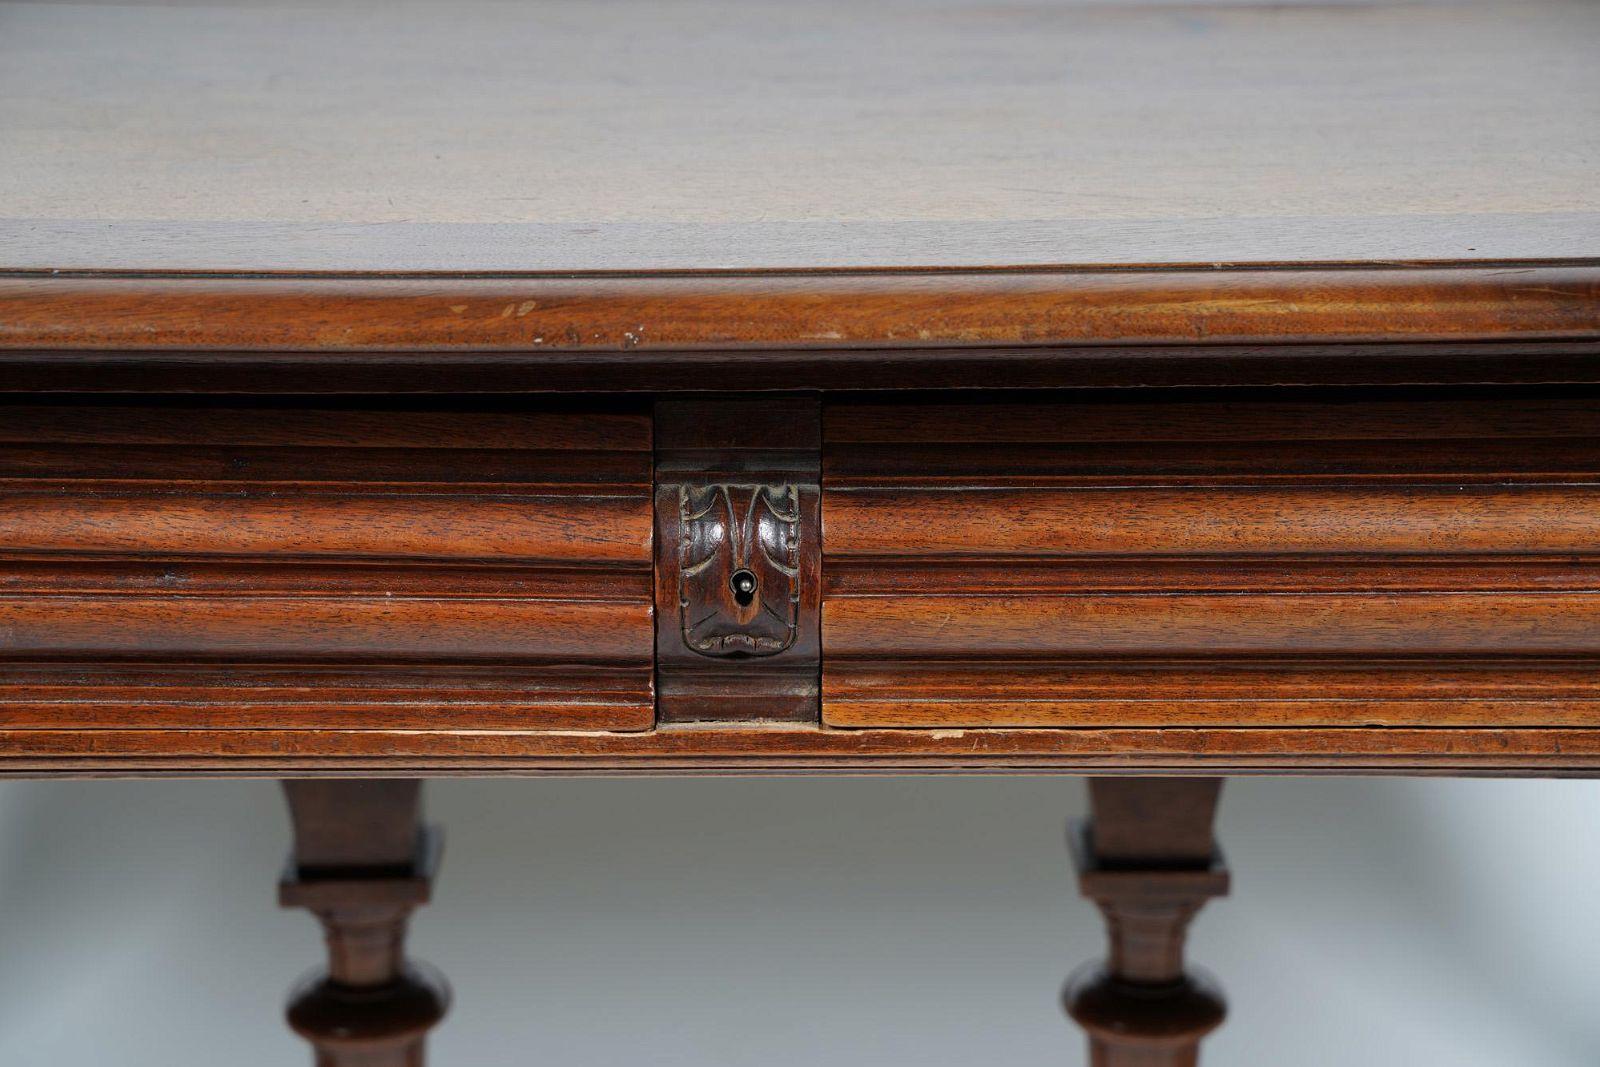 Antique American Renaissance Revival Walnut Library Table Desk Mid 19th Century For Sale 3